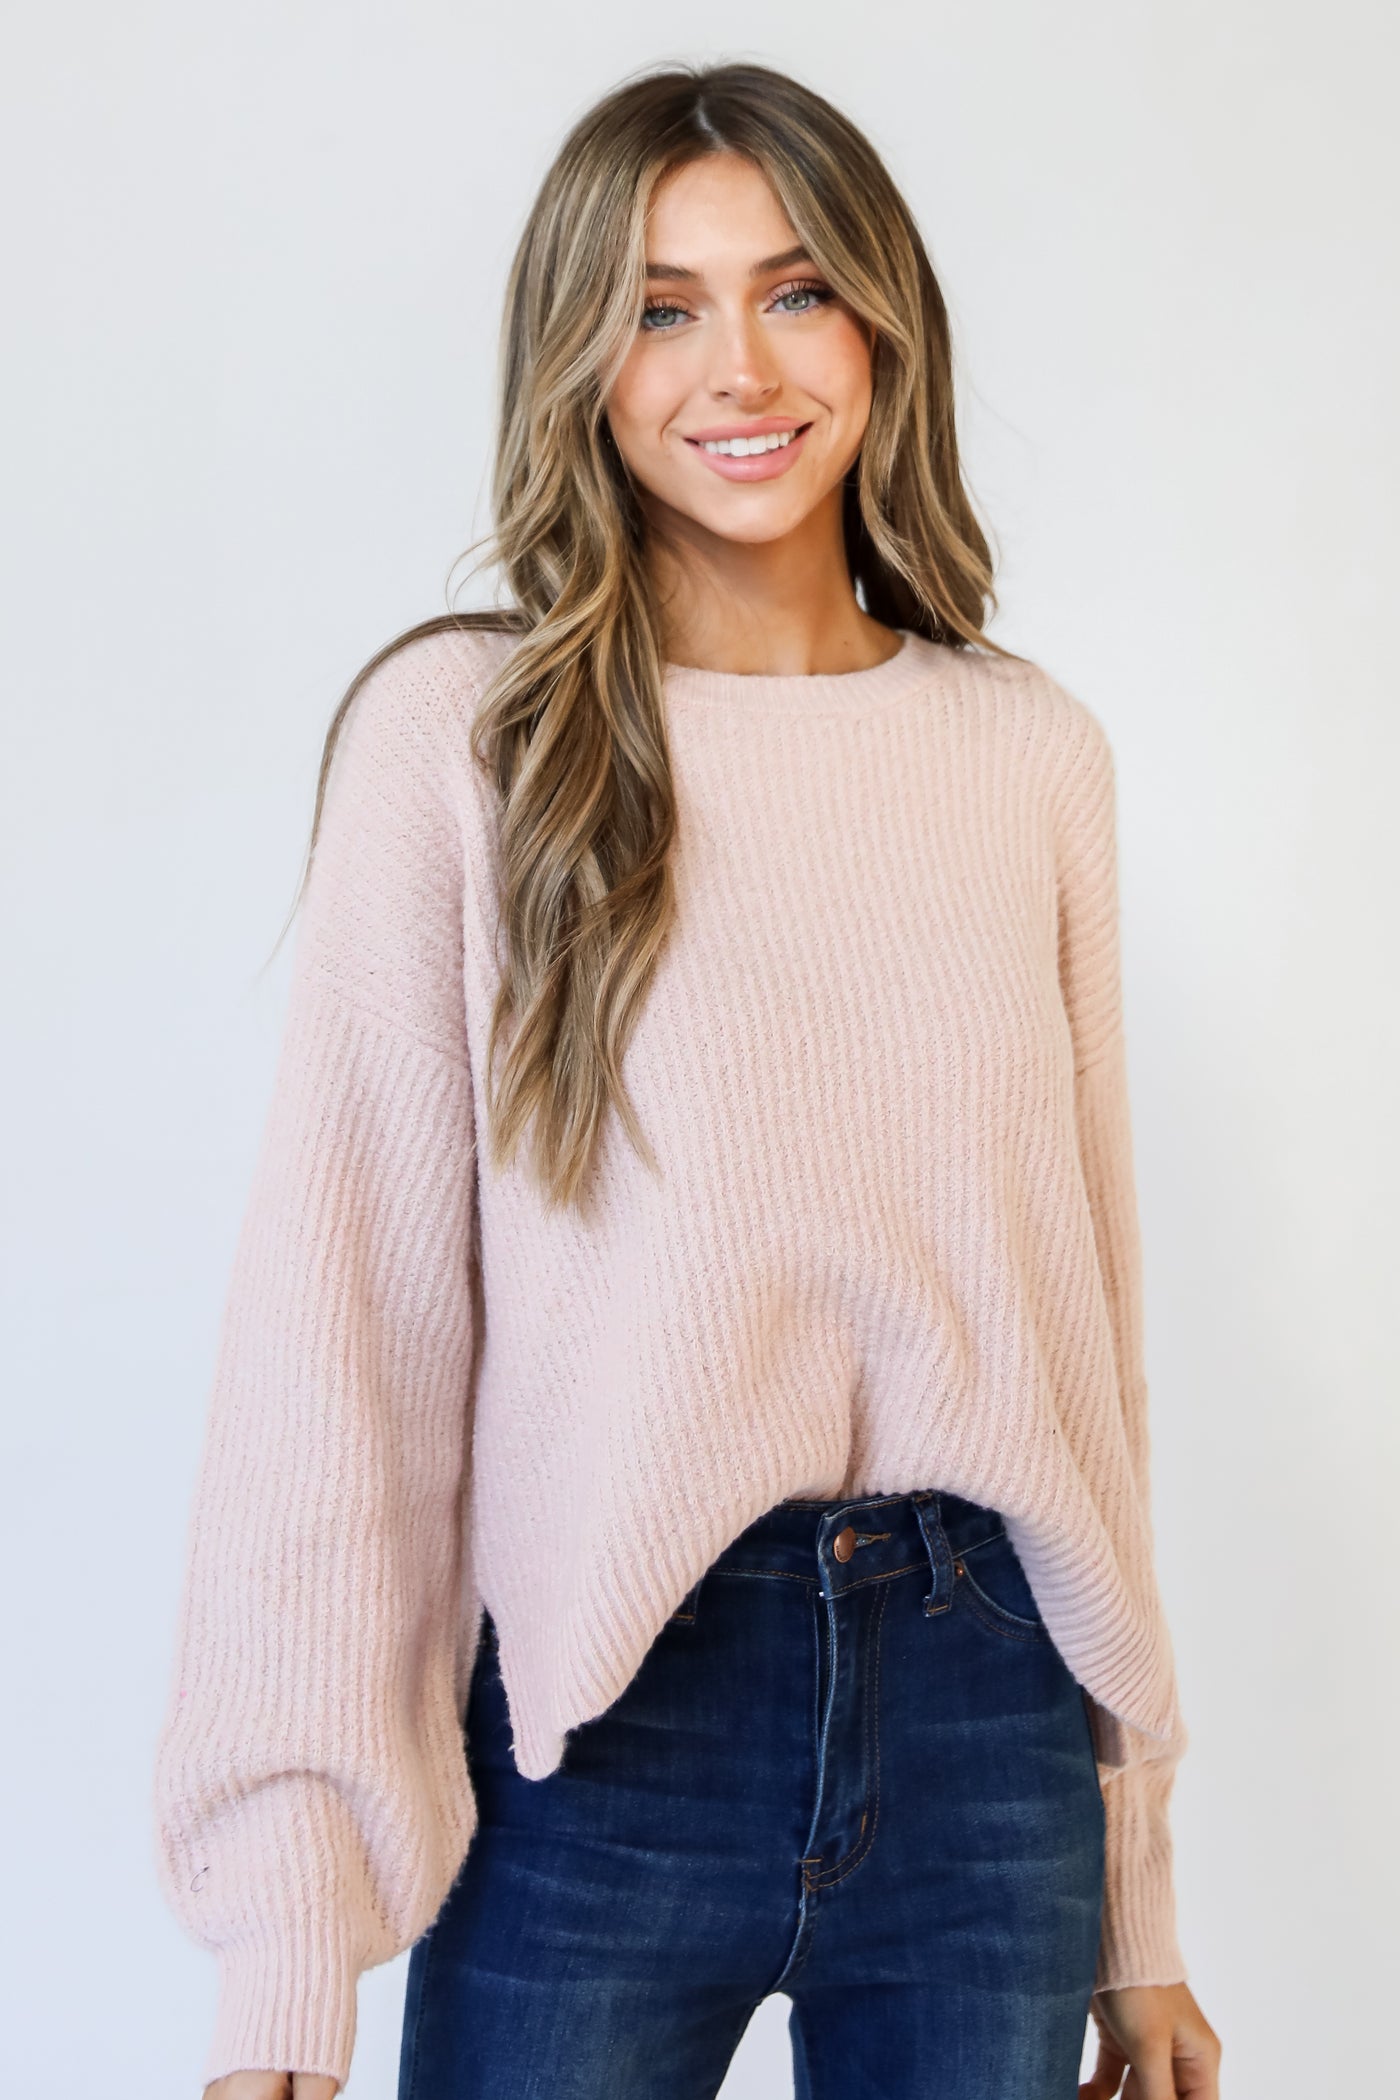 blush Sweater on model